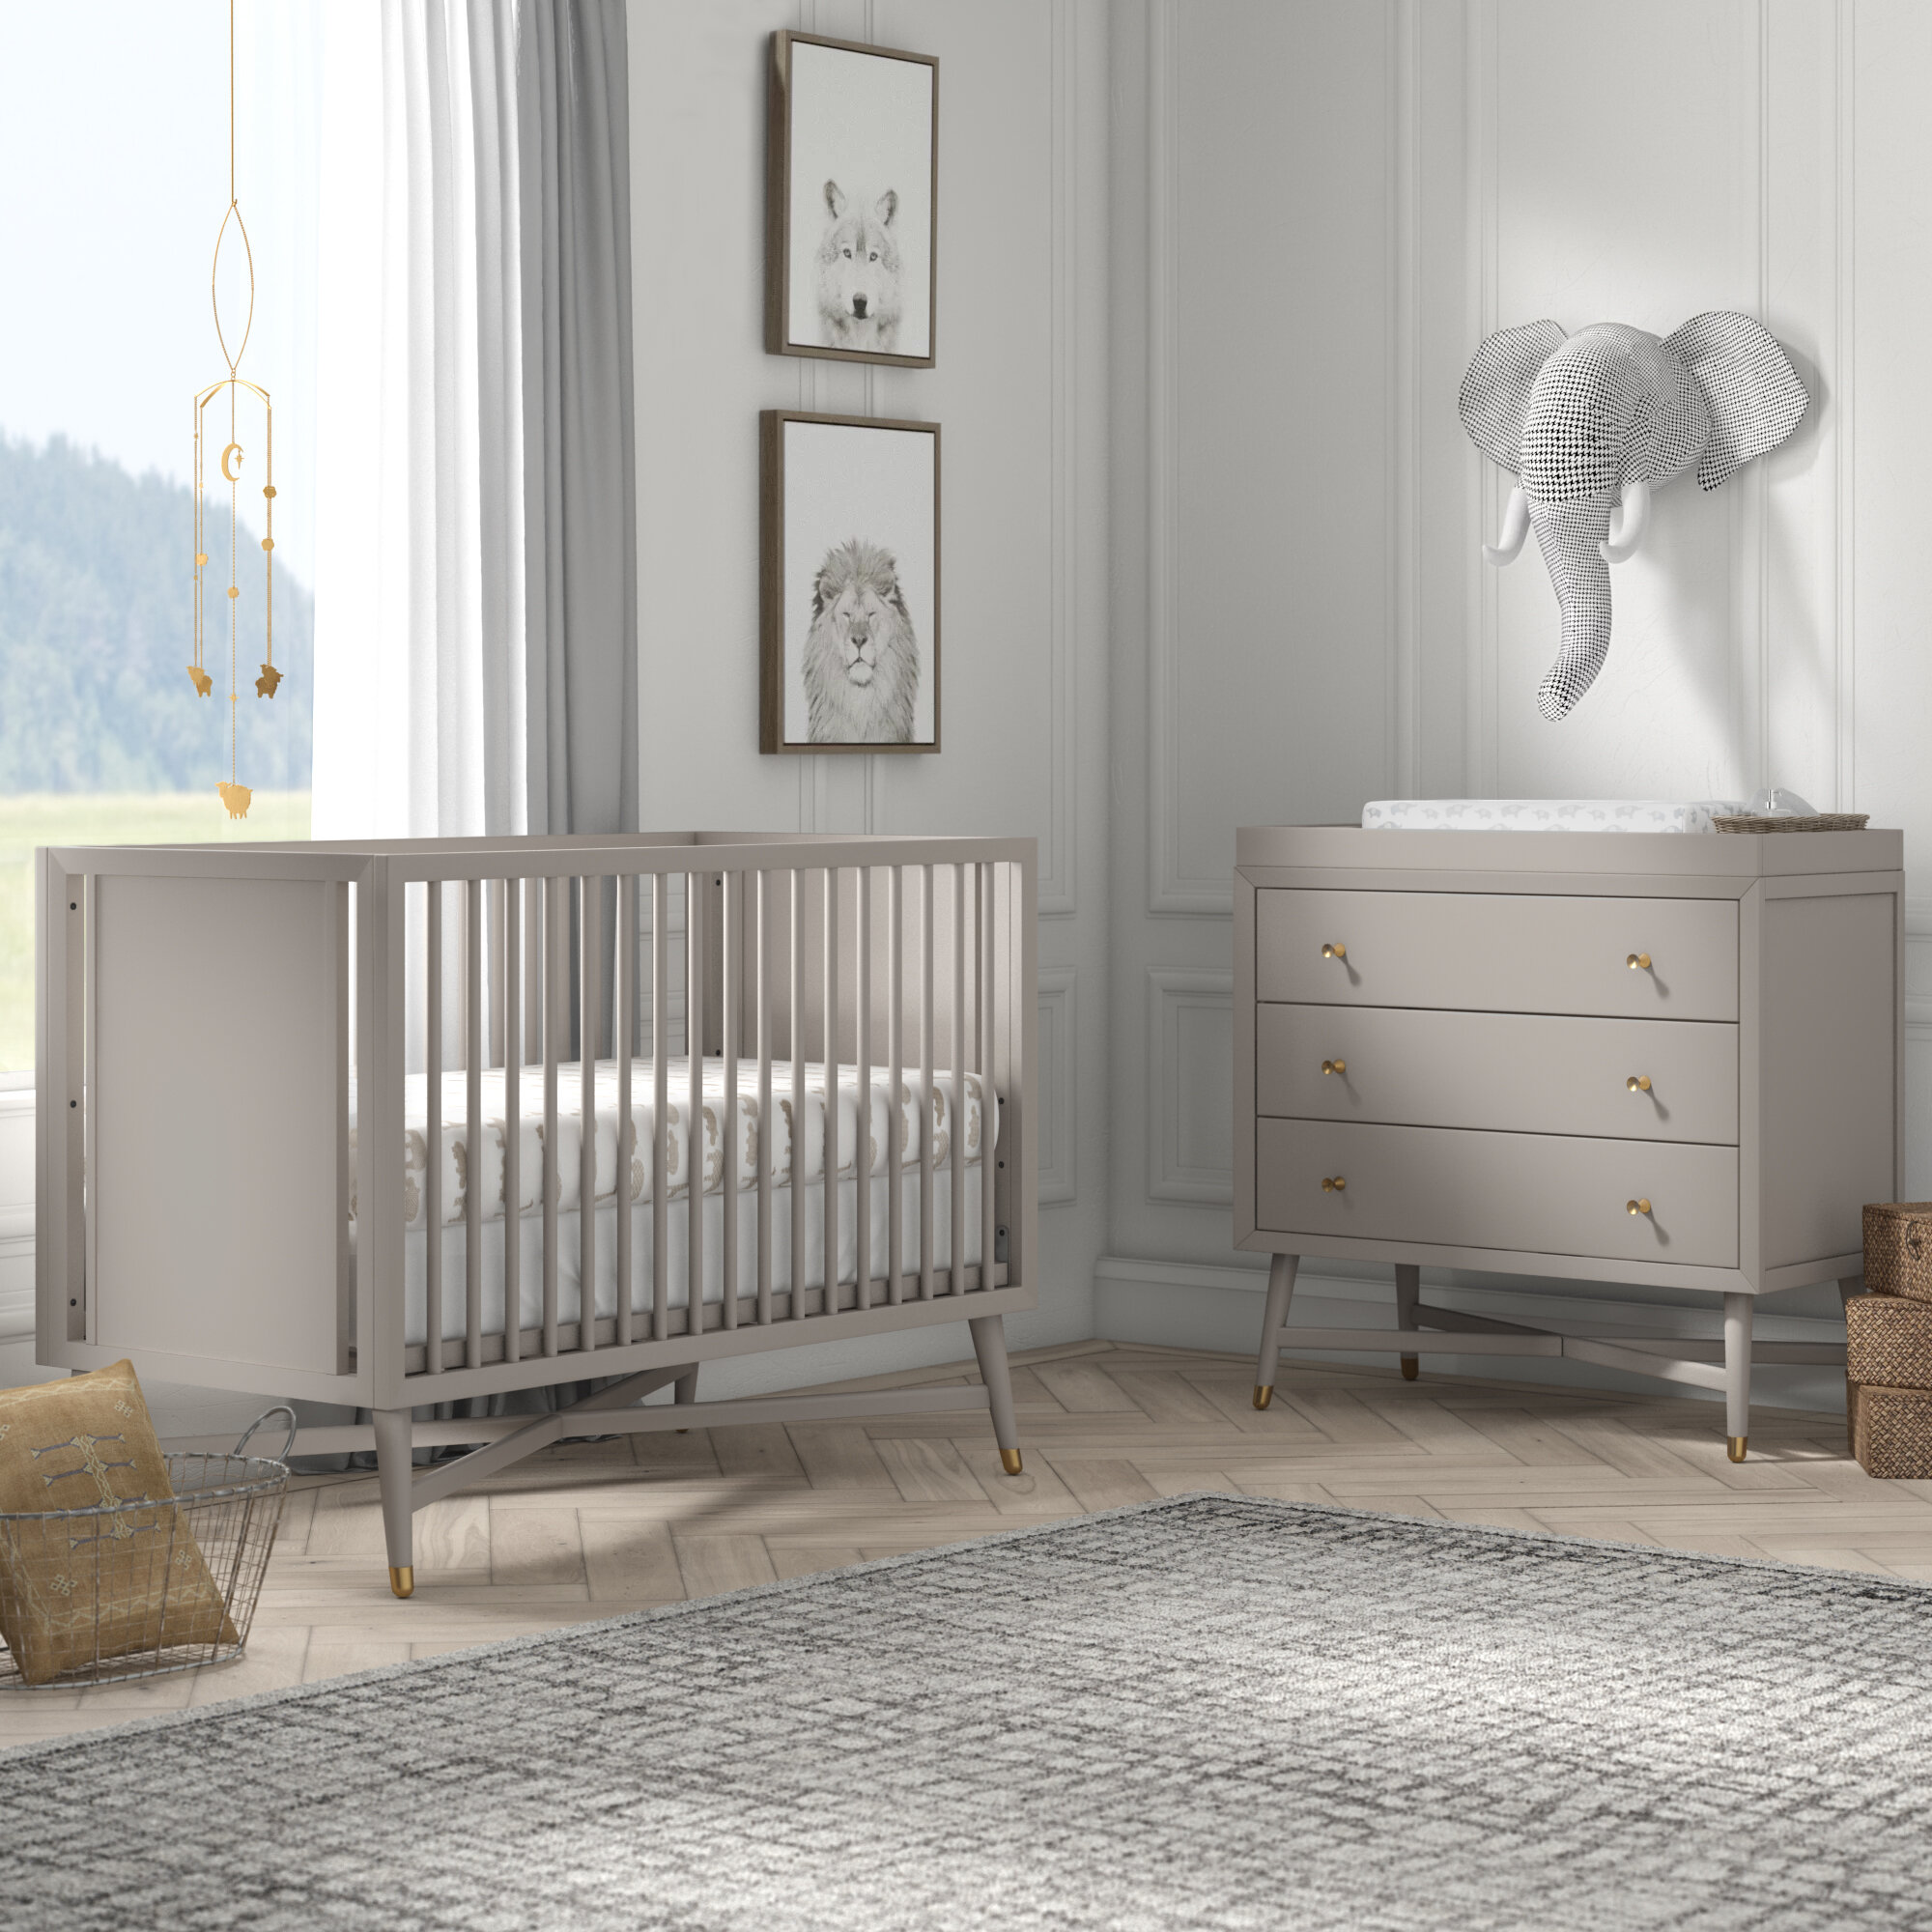 mid century baby furniture